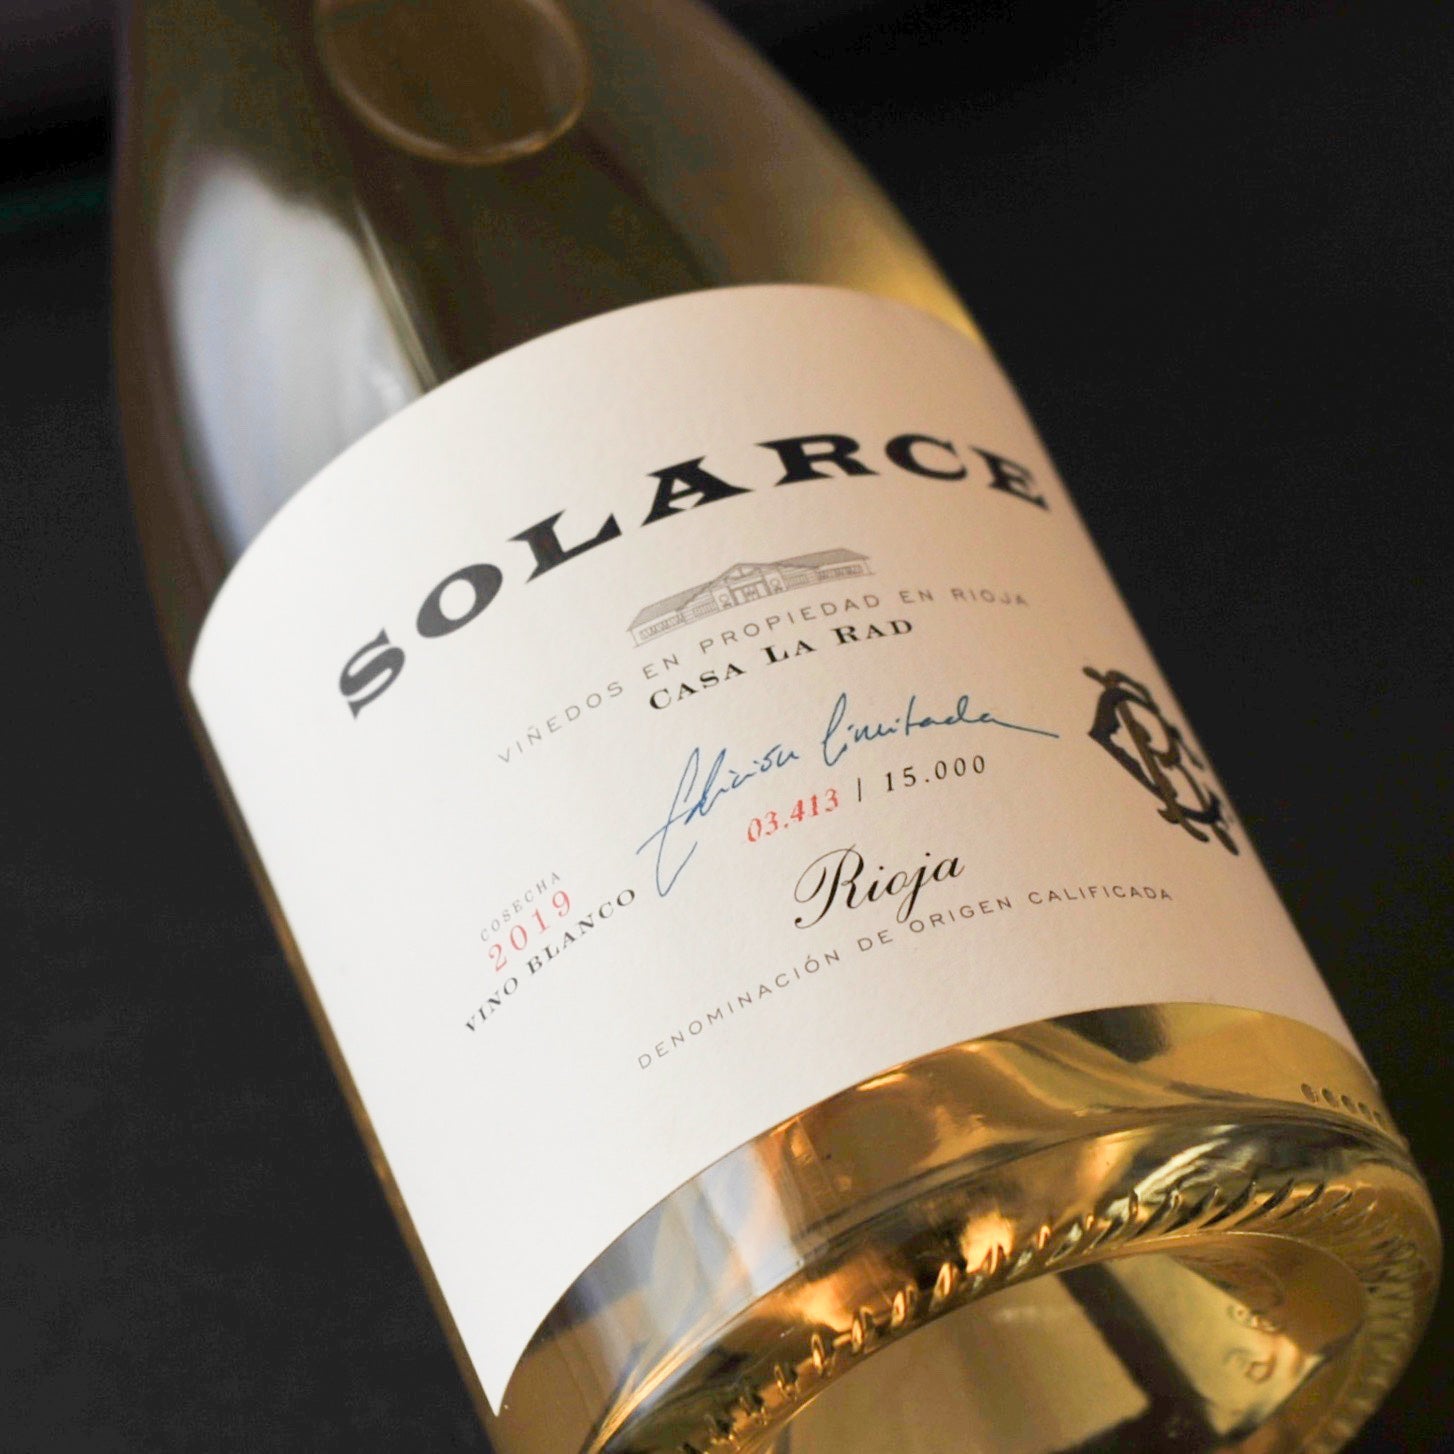 Spanish White Wine Solarce Blanco from Casa La Rad